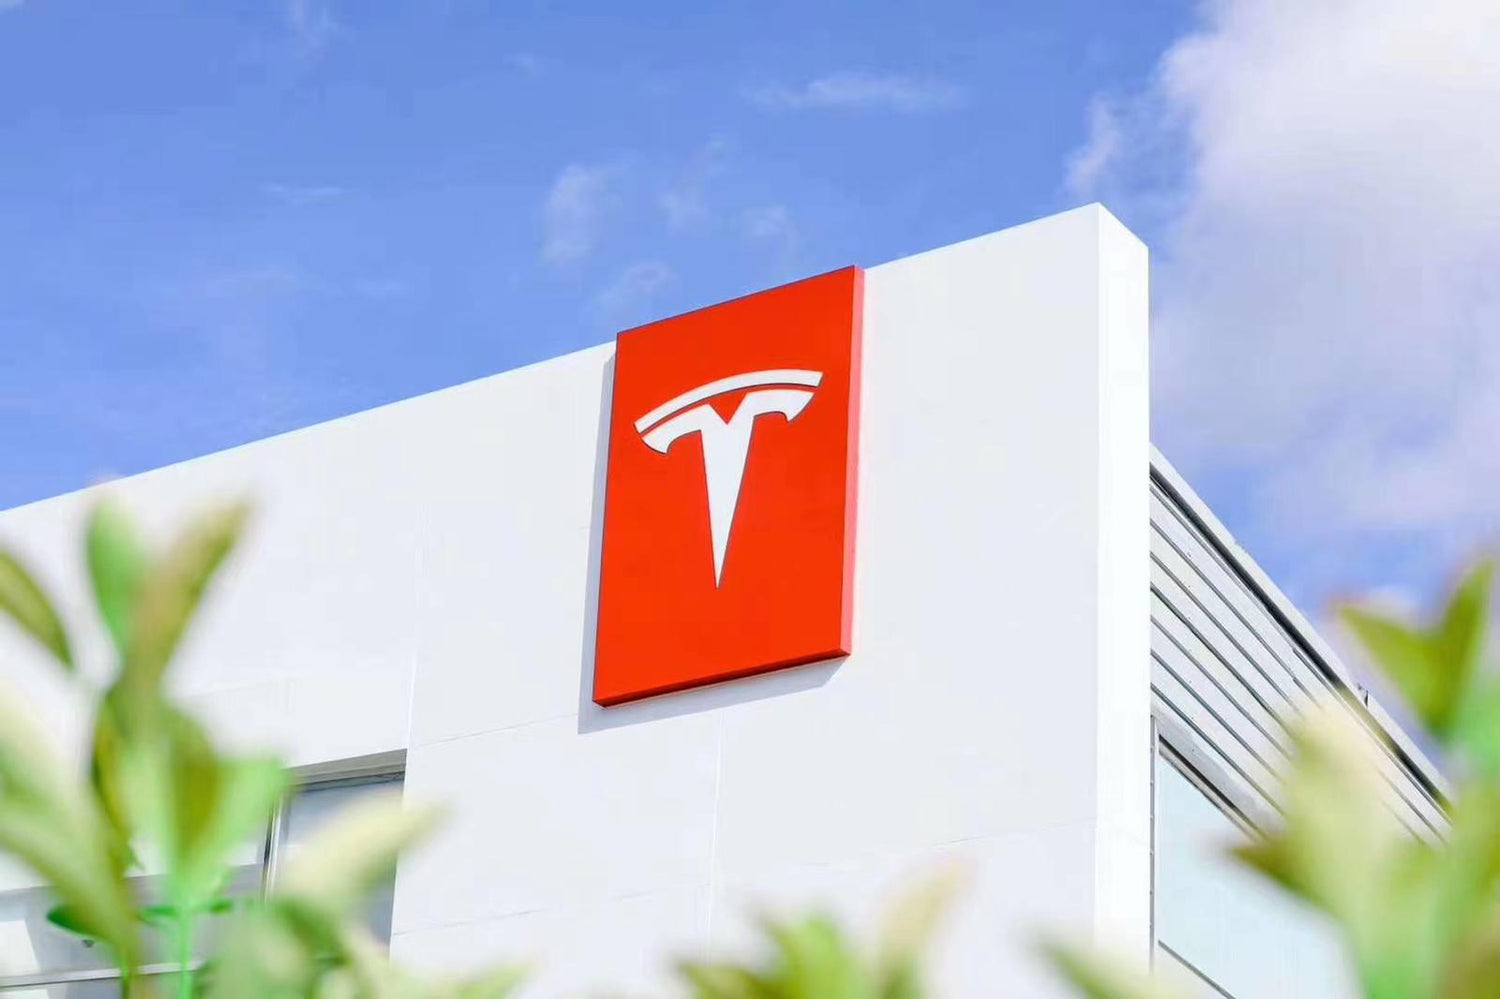 Tesla TSLA Price Target Raised to $450 from $400 by Goldman Sachs